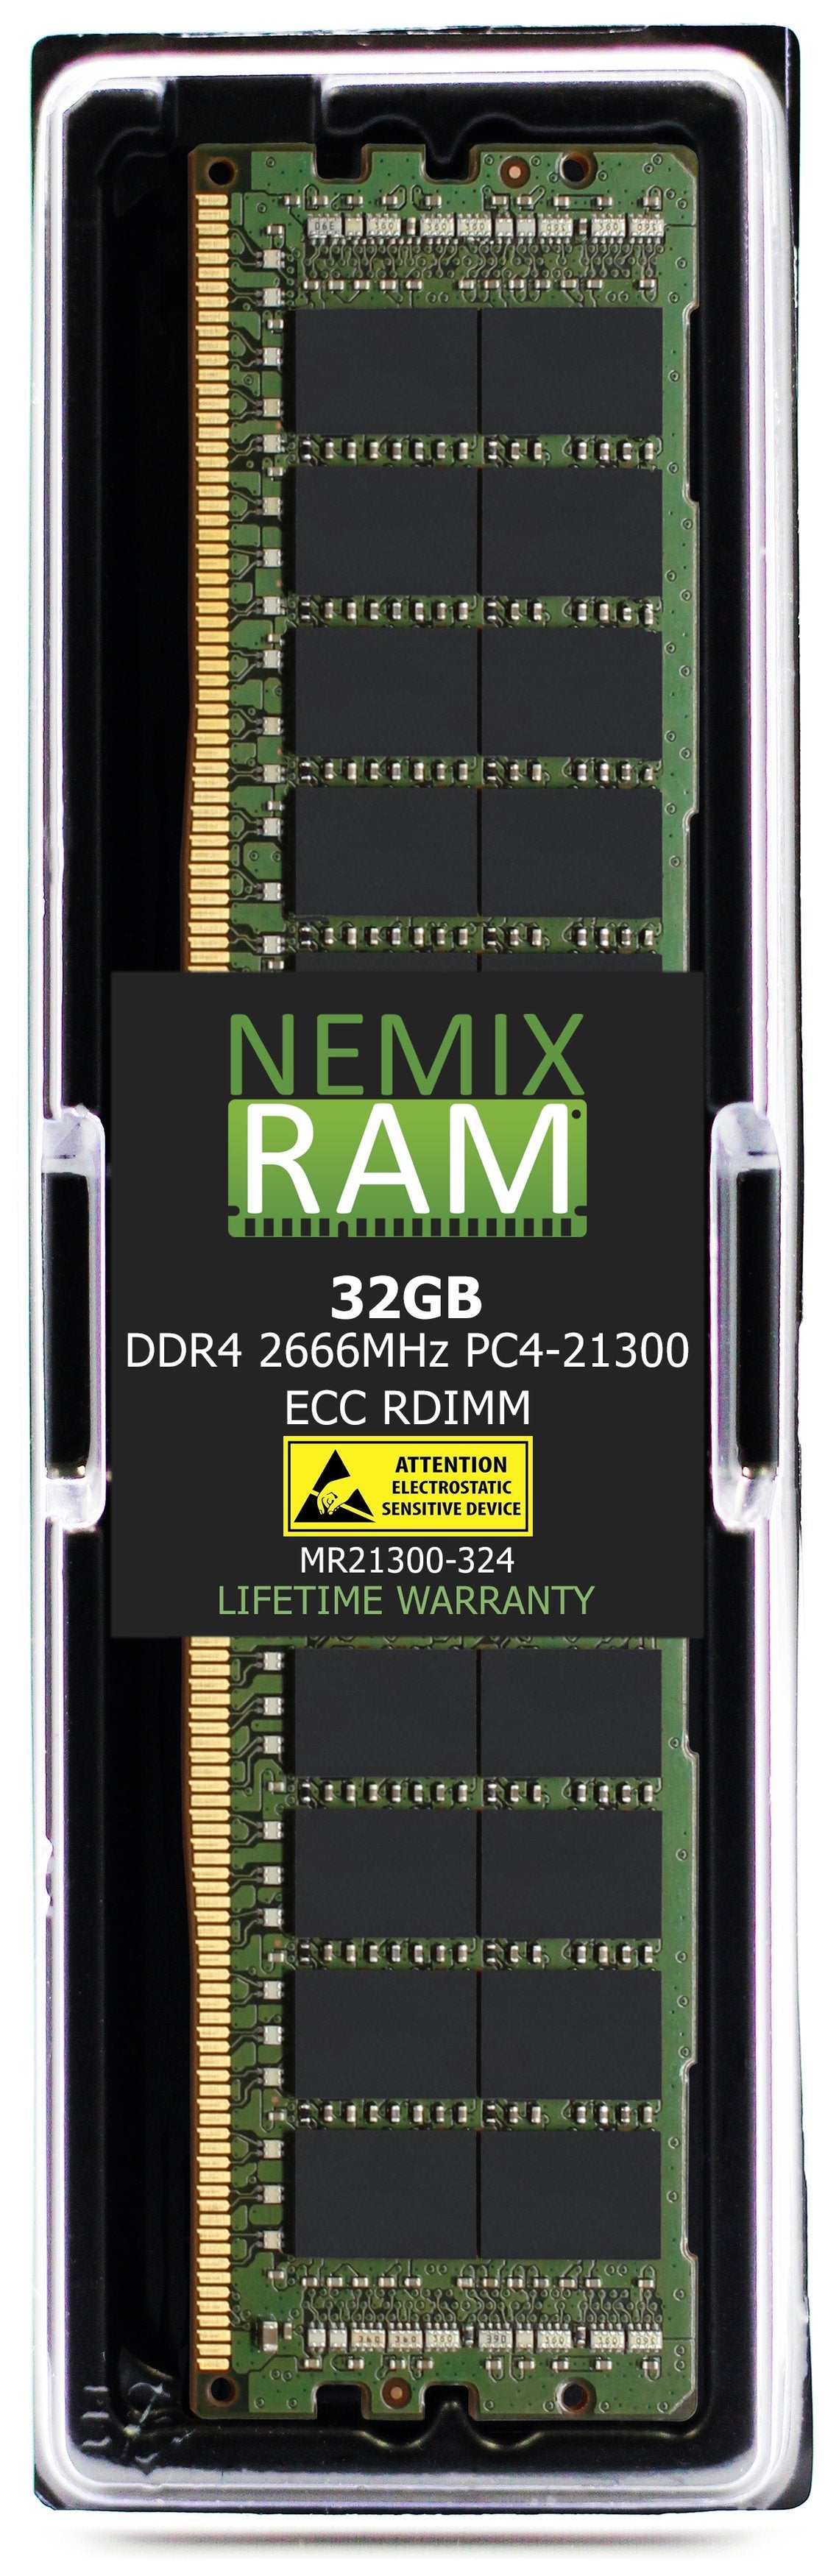 DELL SNPTN78YC/32G A9781929 32GB DDR4 2666MHZ PC4-21300 RDIMM Compatible Upgrade